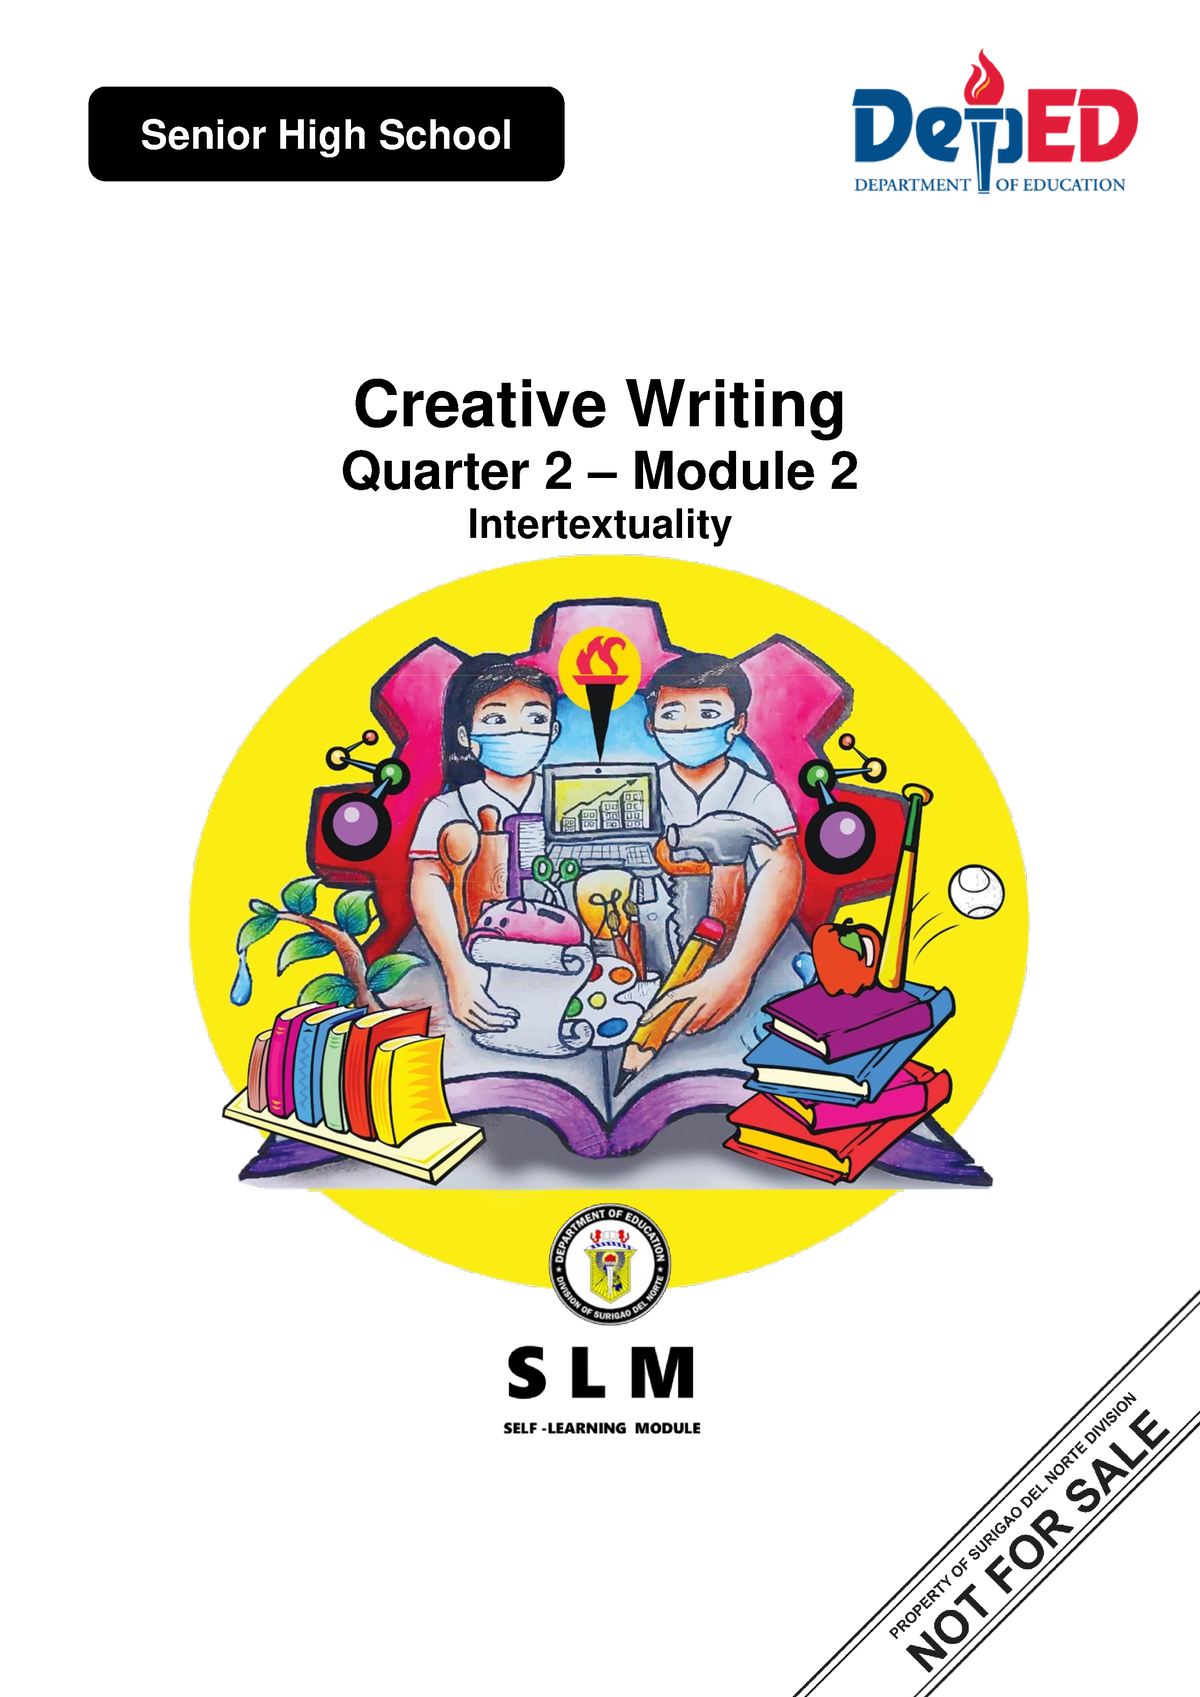 dll for creative writing quarter 2